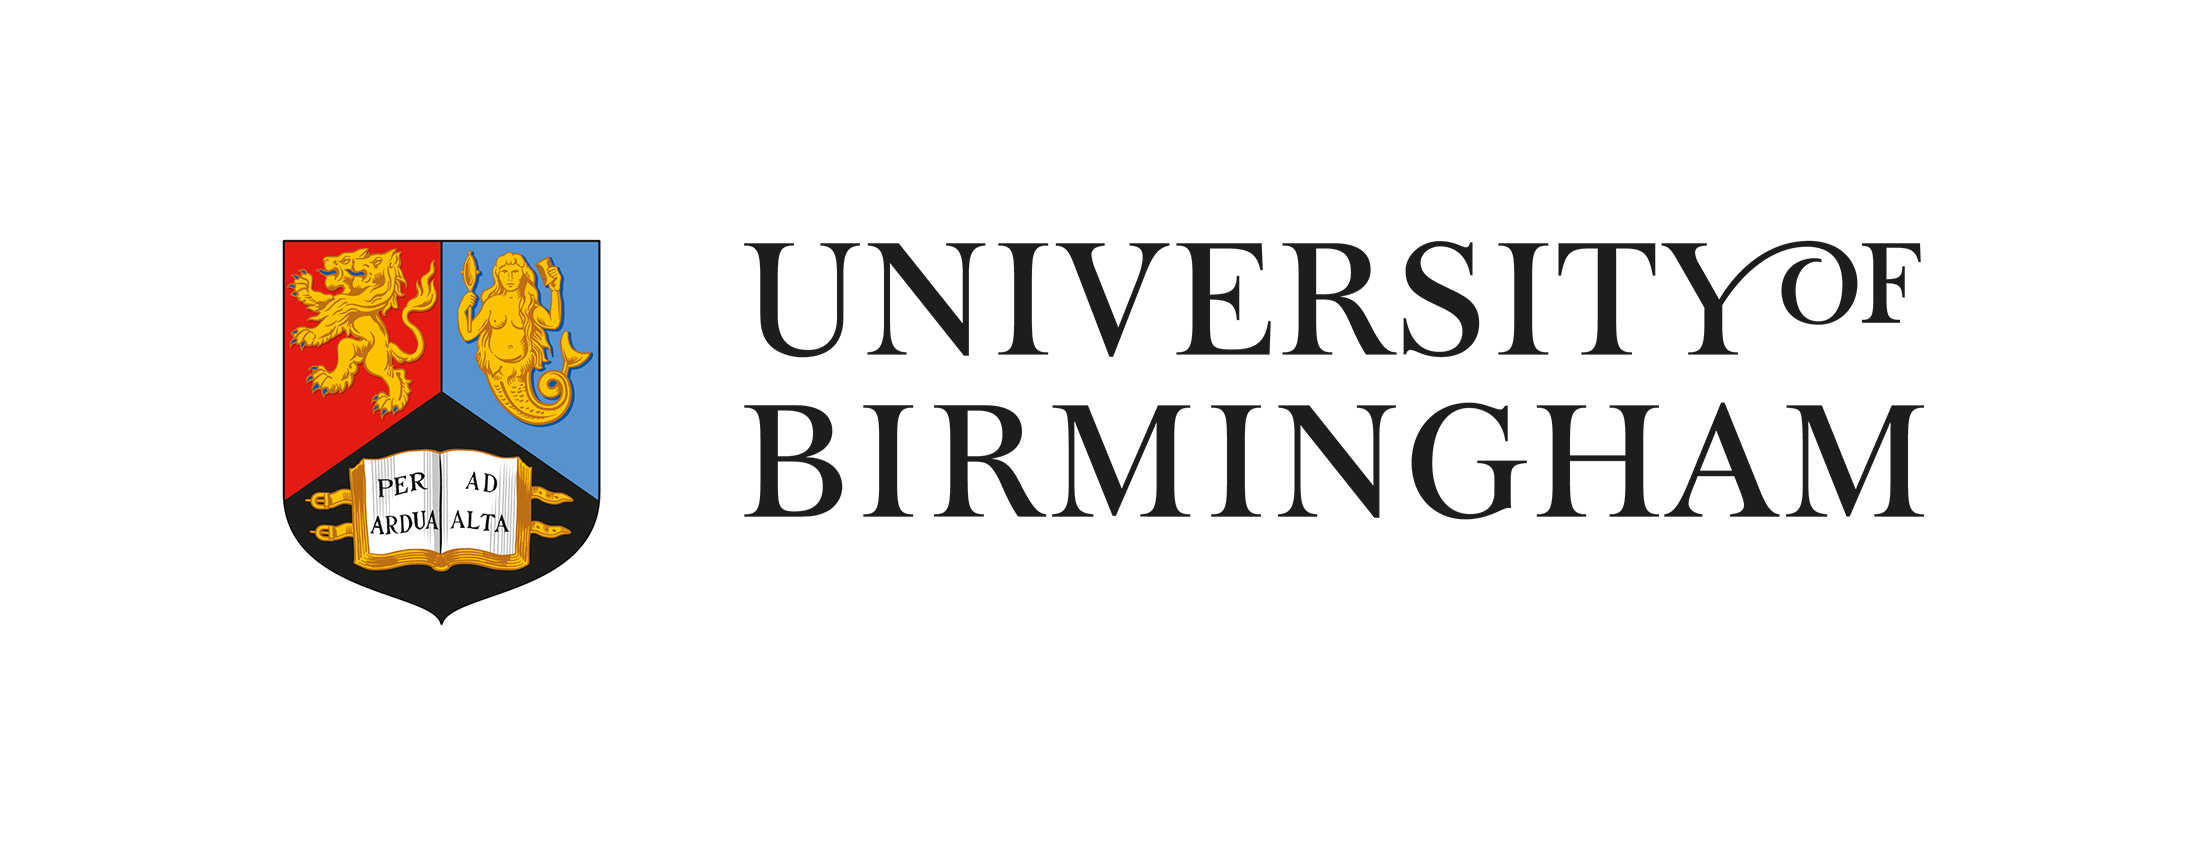 University logo guidelines